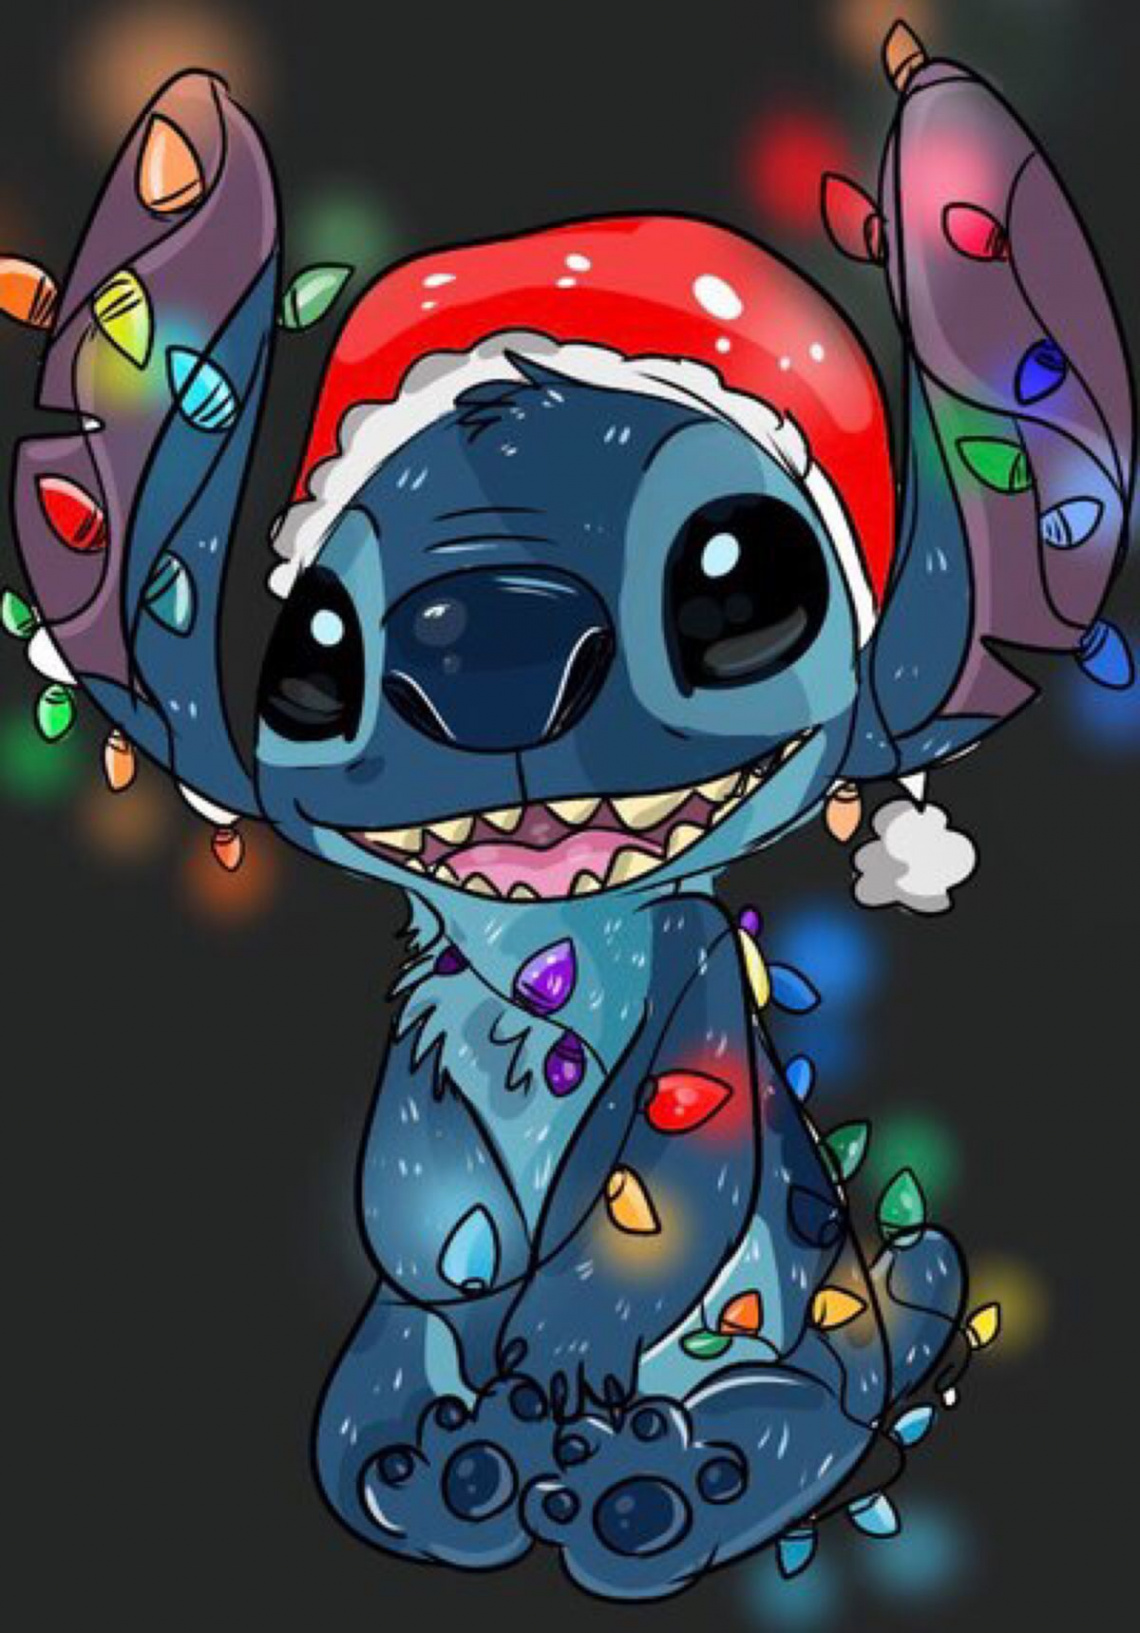 Christmas stitch by mak on @DeviantArt  Christmas wallpaper